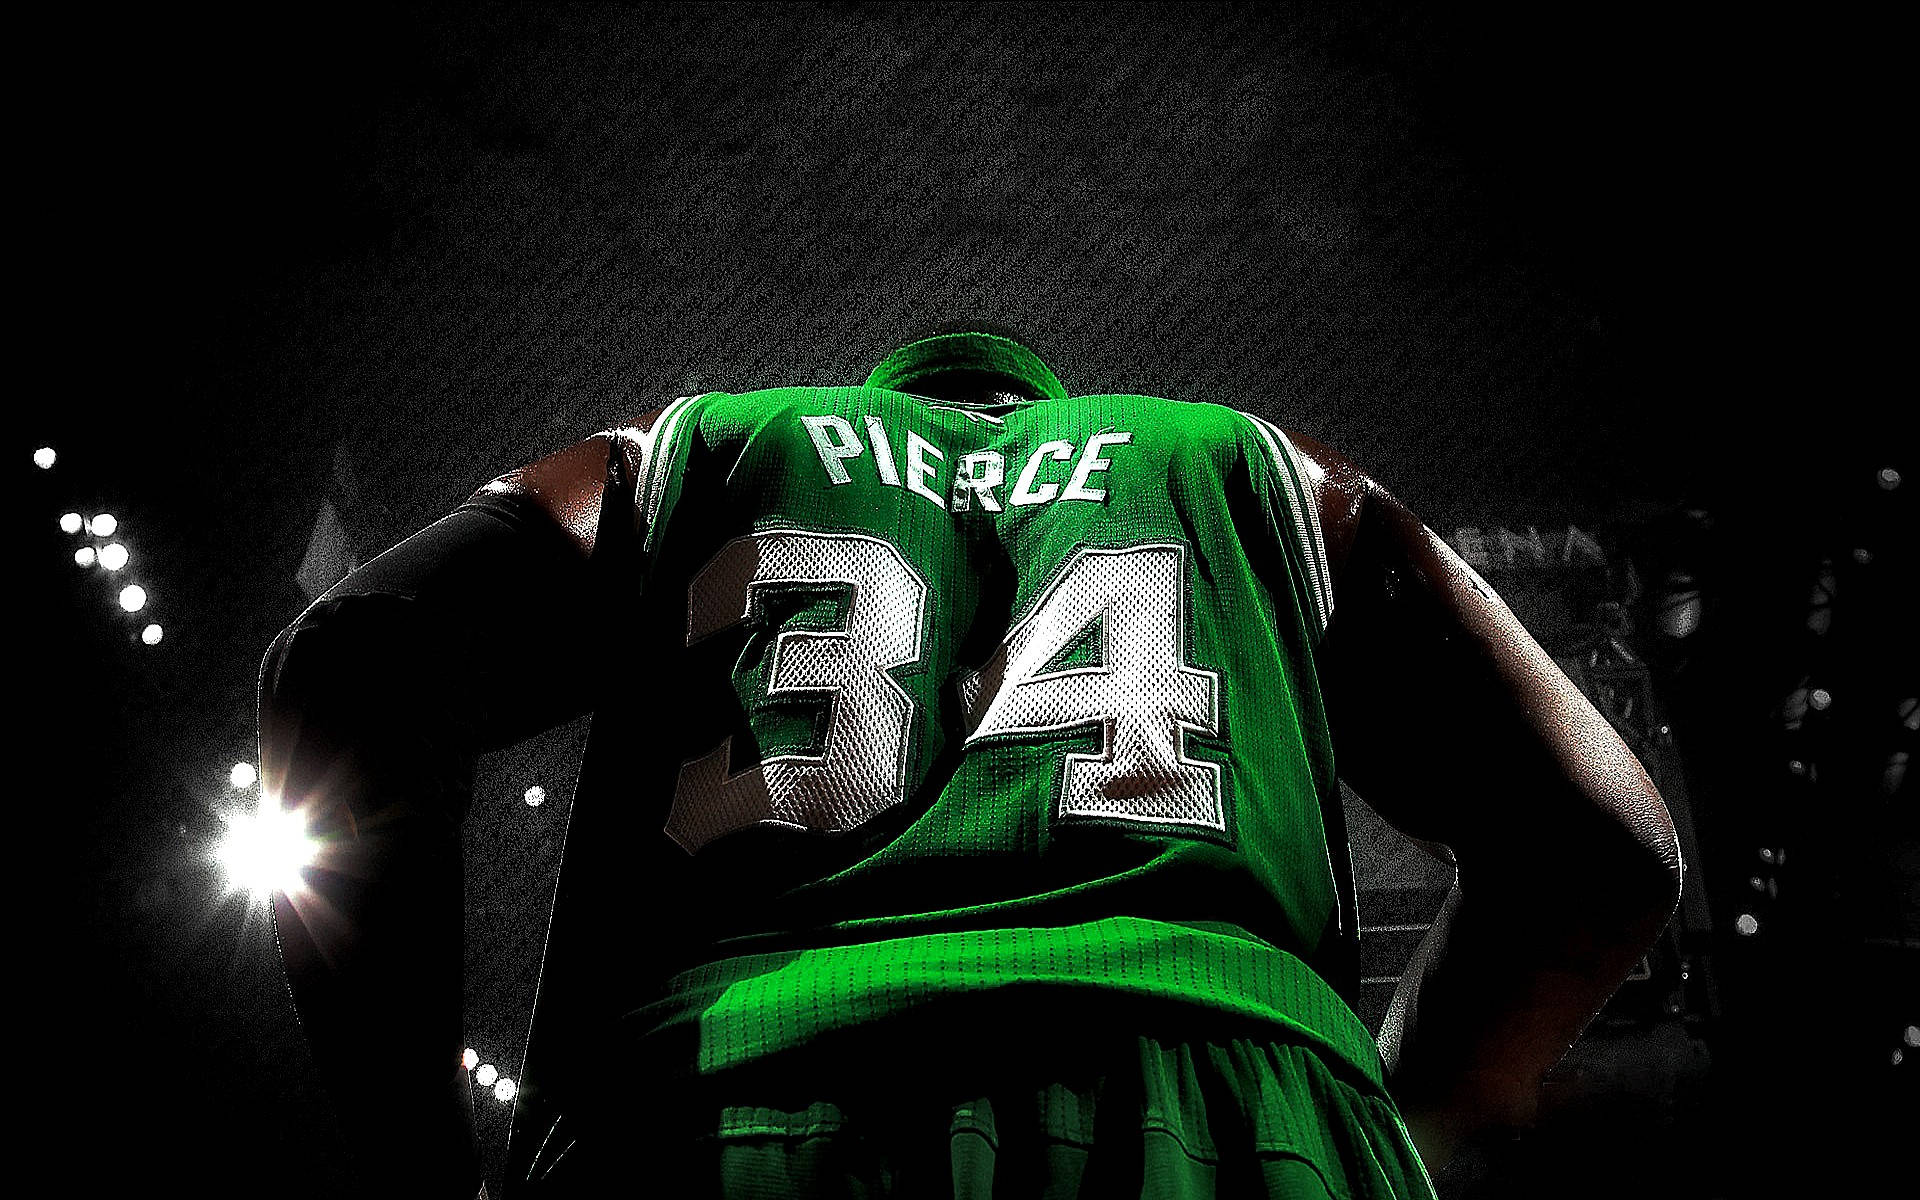 Paul Pierce Shot From Behind Under Spotlight Background